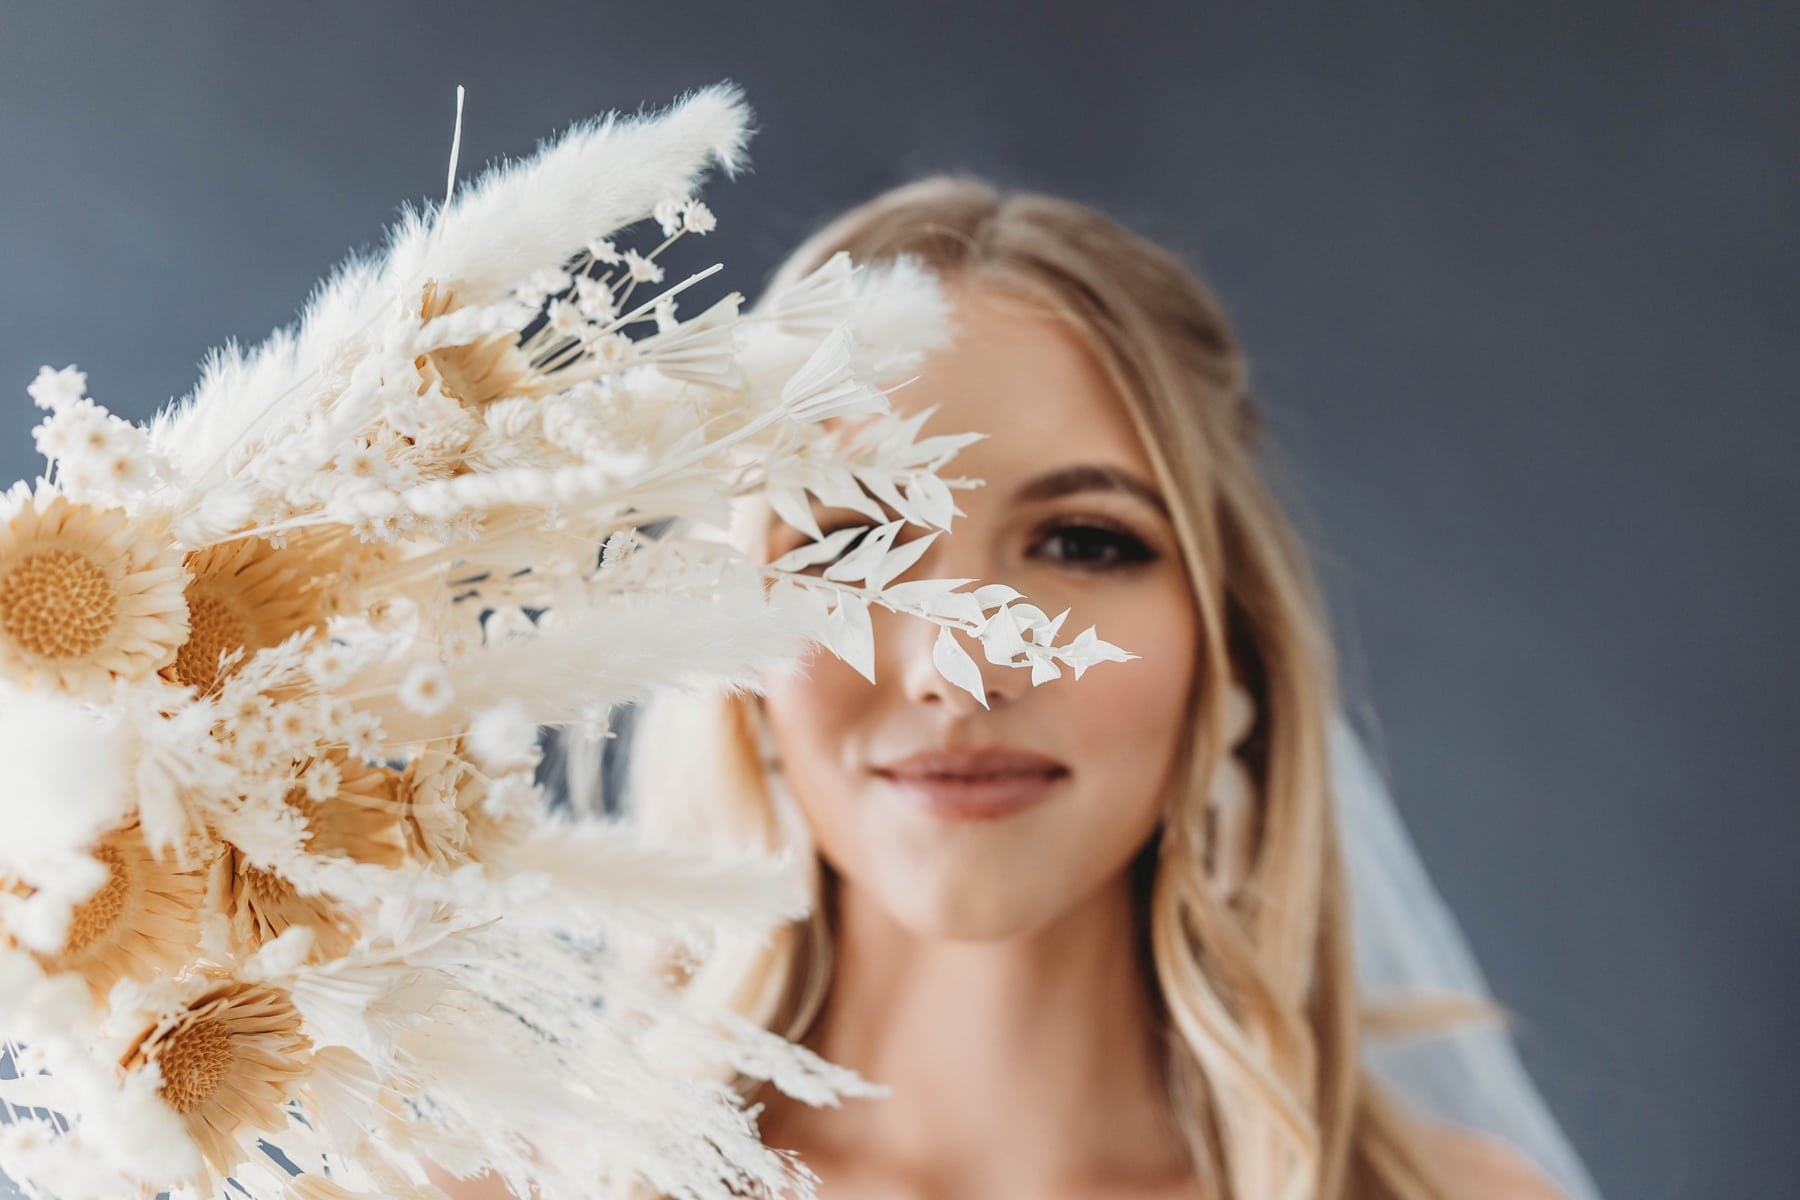 Wedding & Elopement Photographer, bride stands behind floral arrangement, she is happy